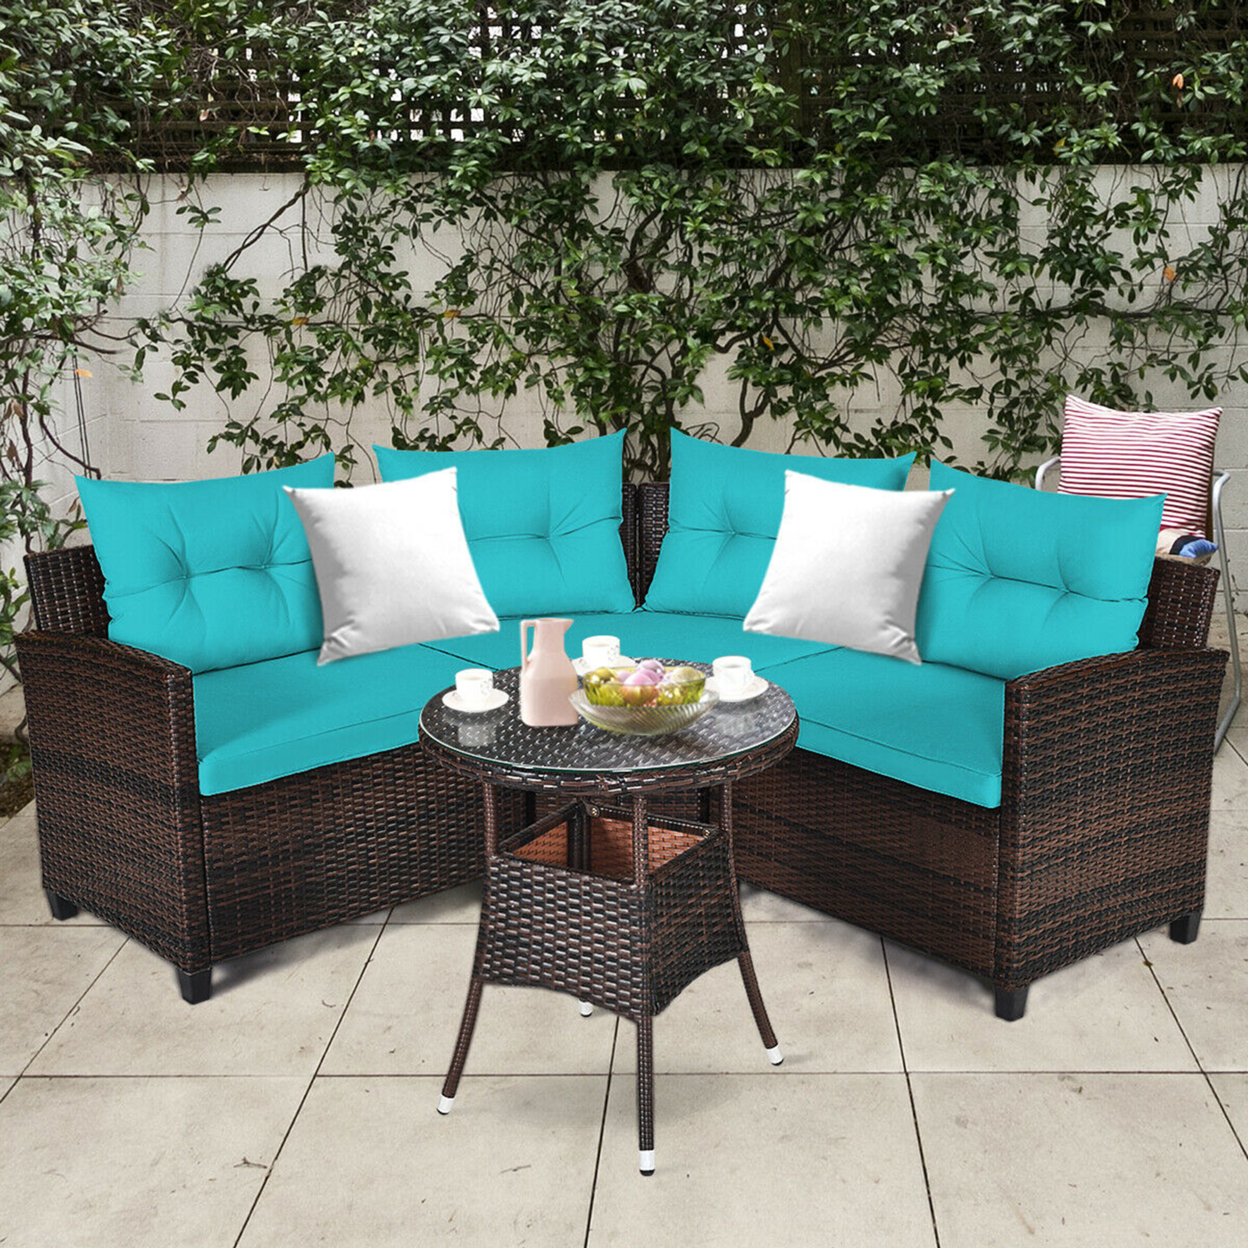 4PCS Patio Furniture Set Outdoor Rattan Sectional Sofa Set W/ Turquoise Cushions